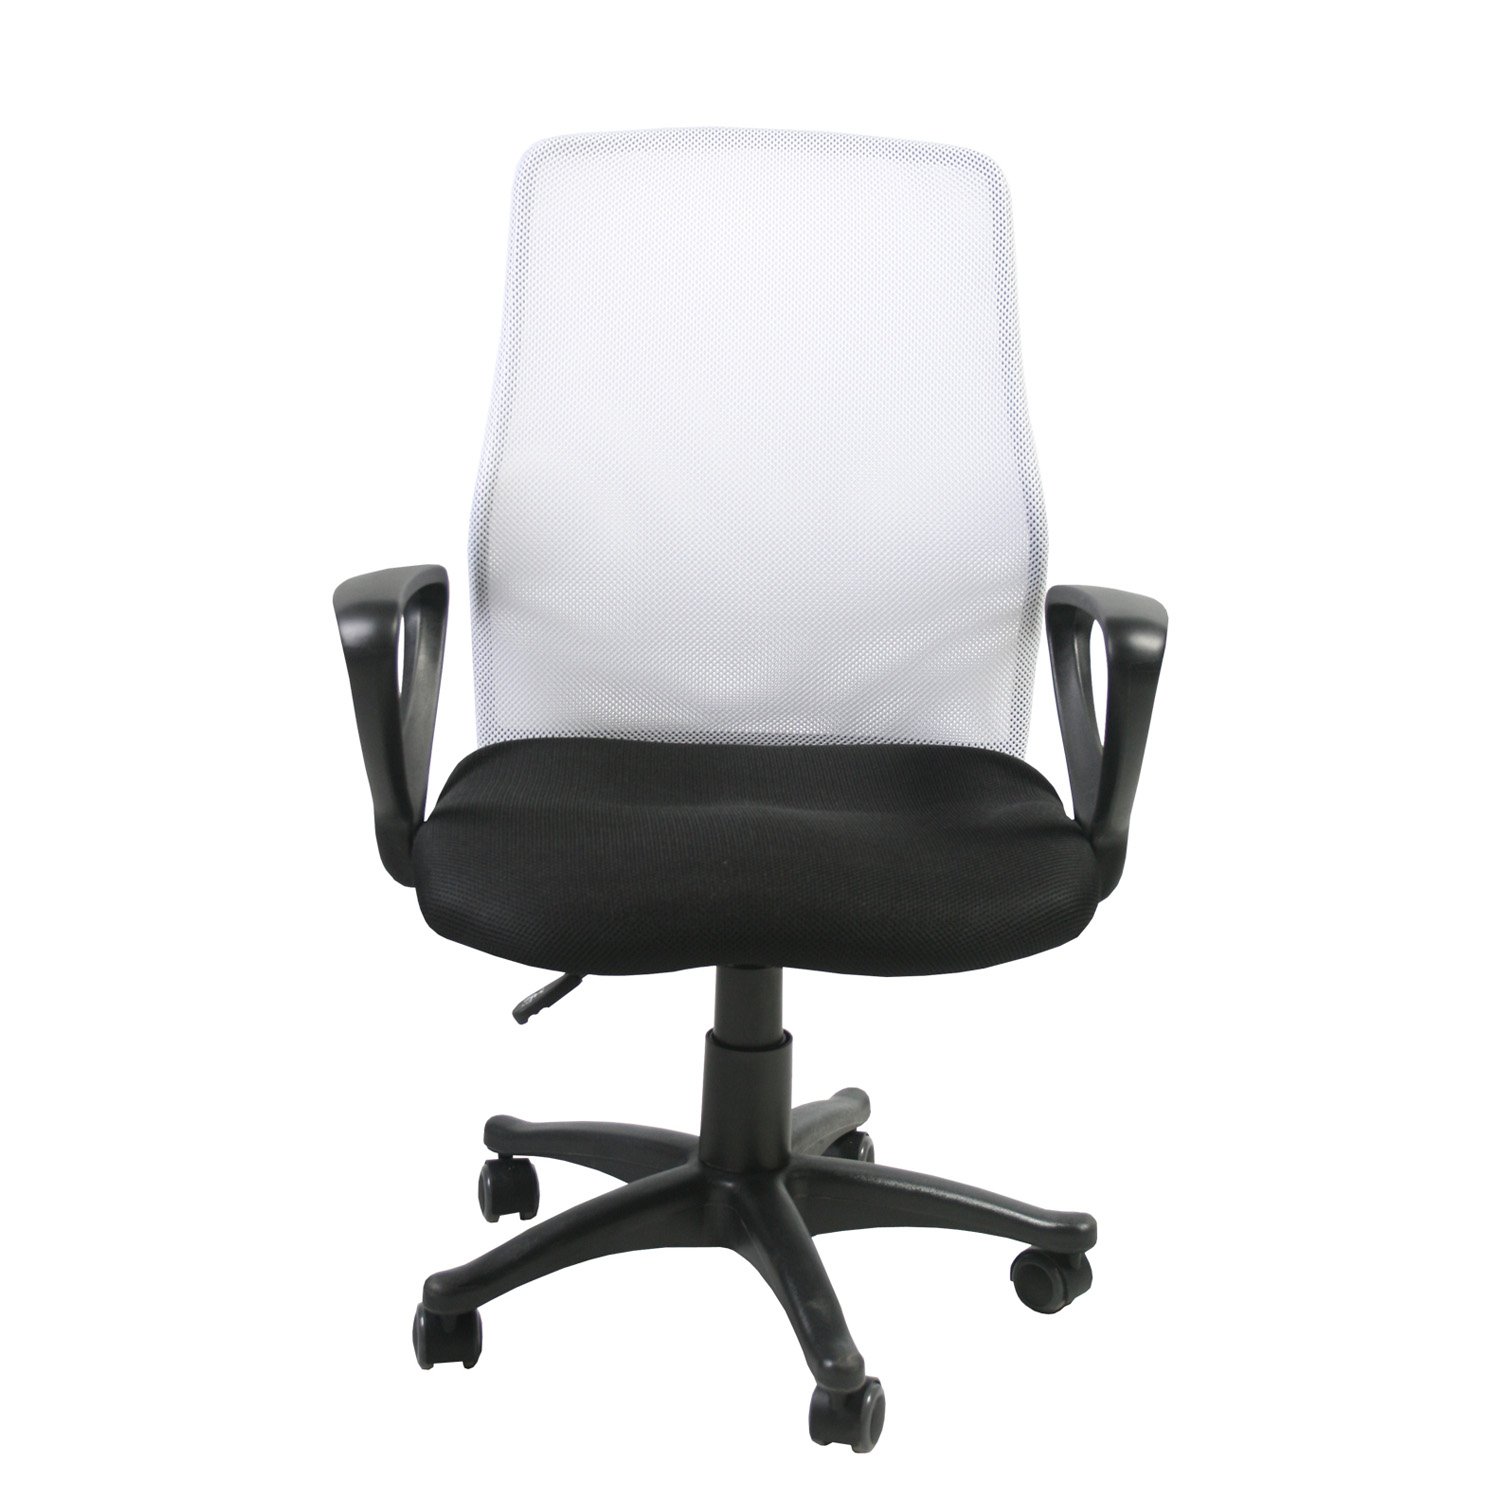 Biuro kėdė TREVISO, 59x58x90-102 cm, balta